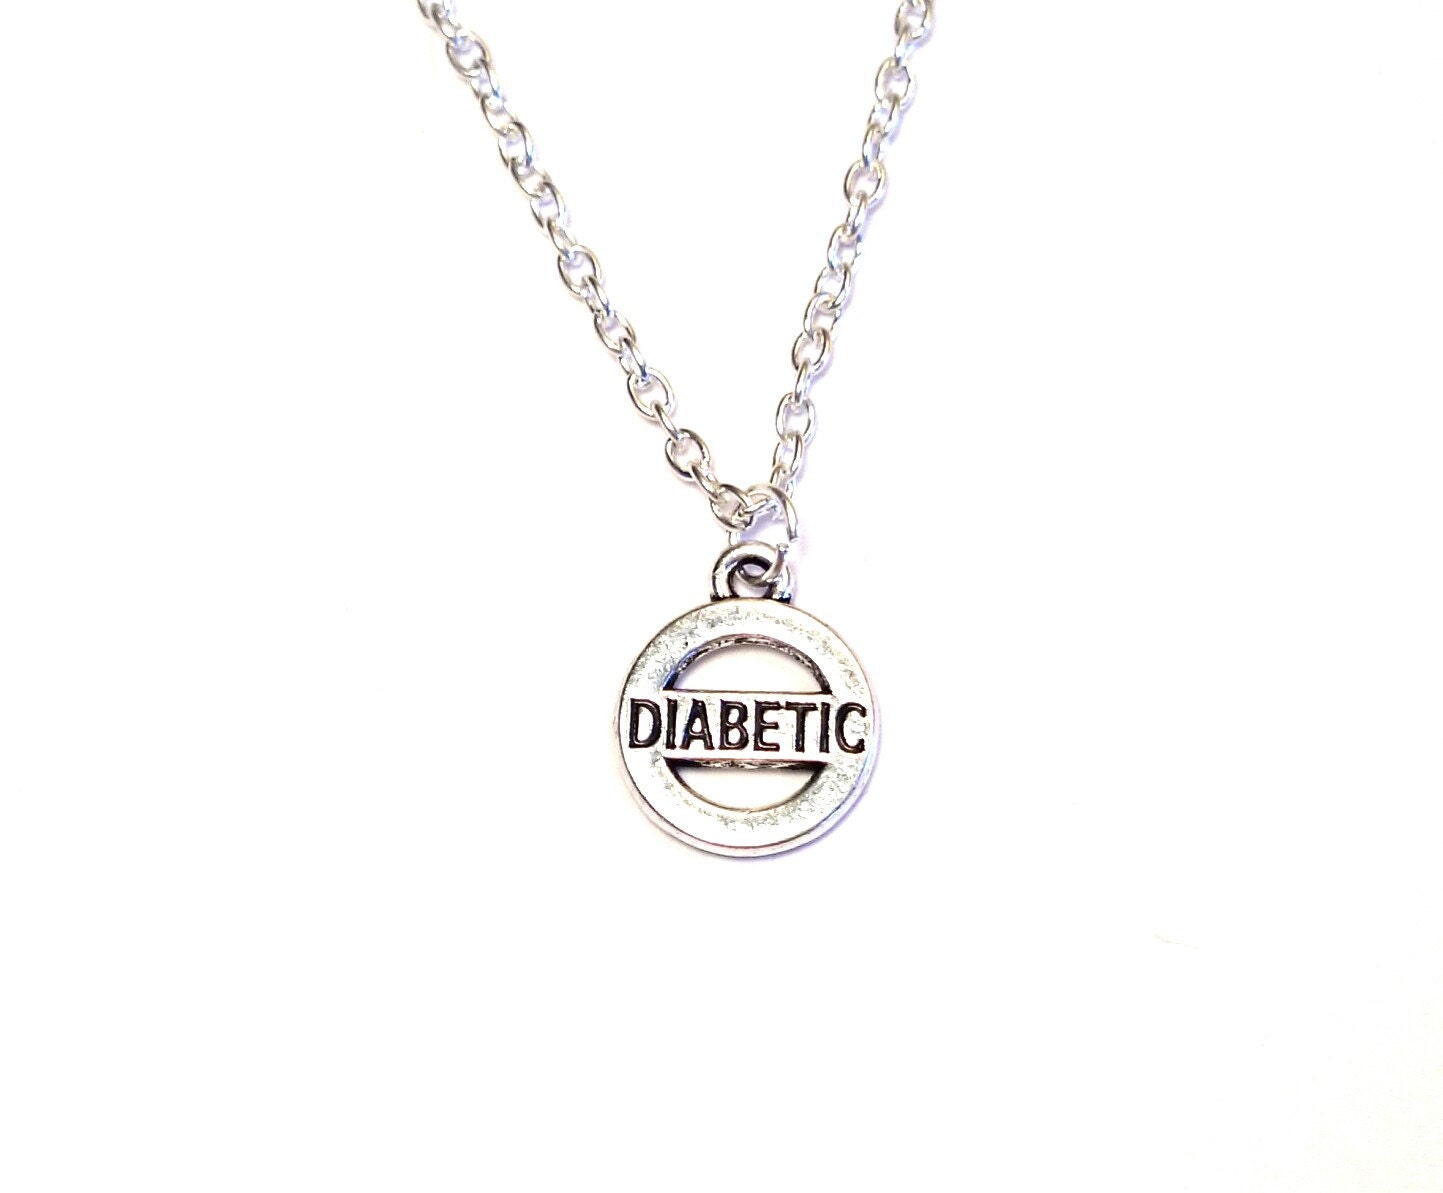 Diabetic Necklace Diabetic Jewelry by GustavsDachshundShop on Etsy